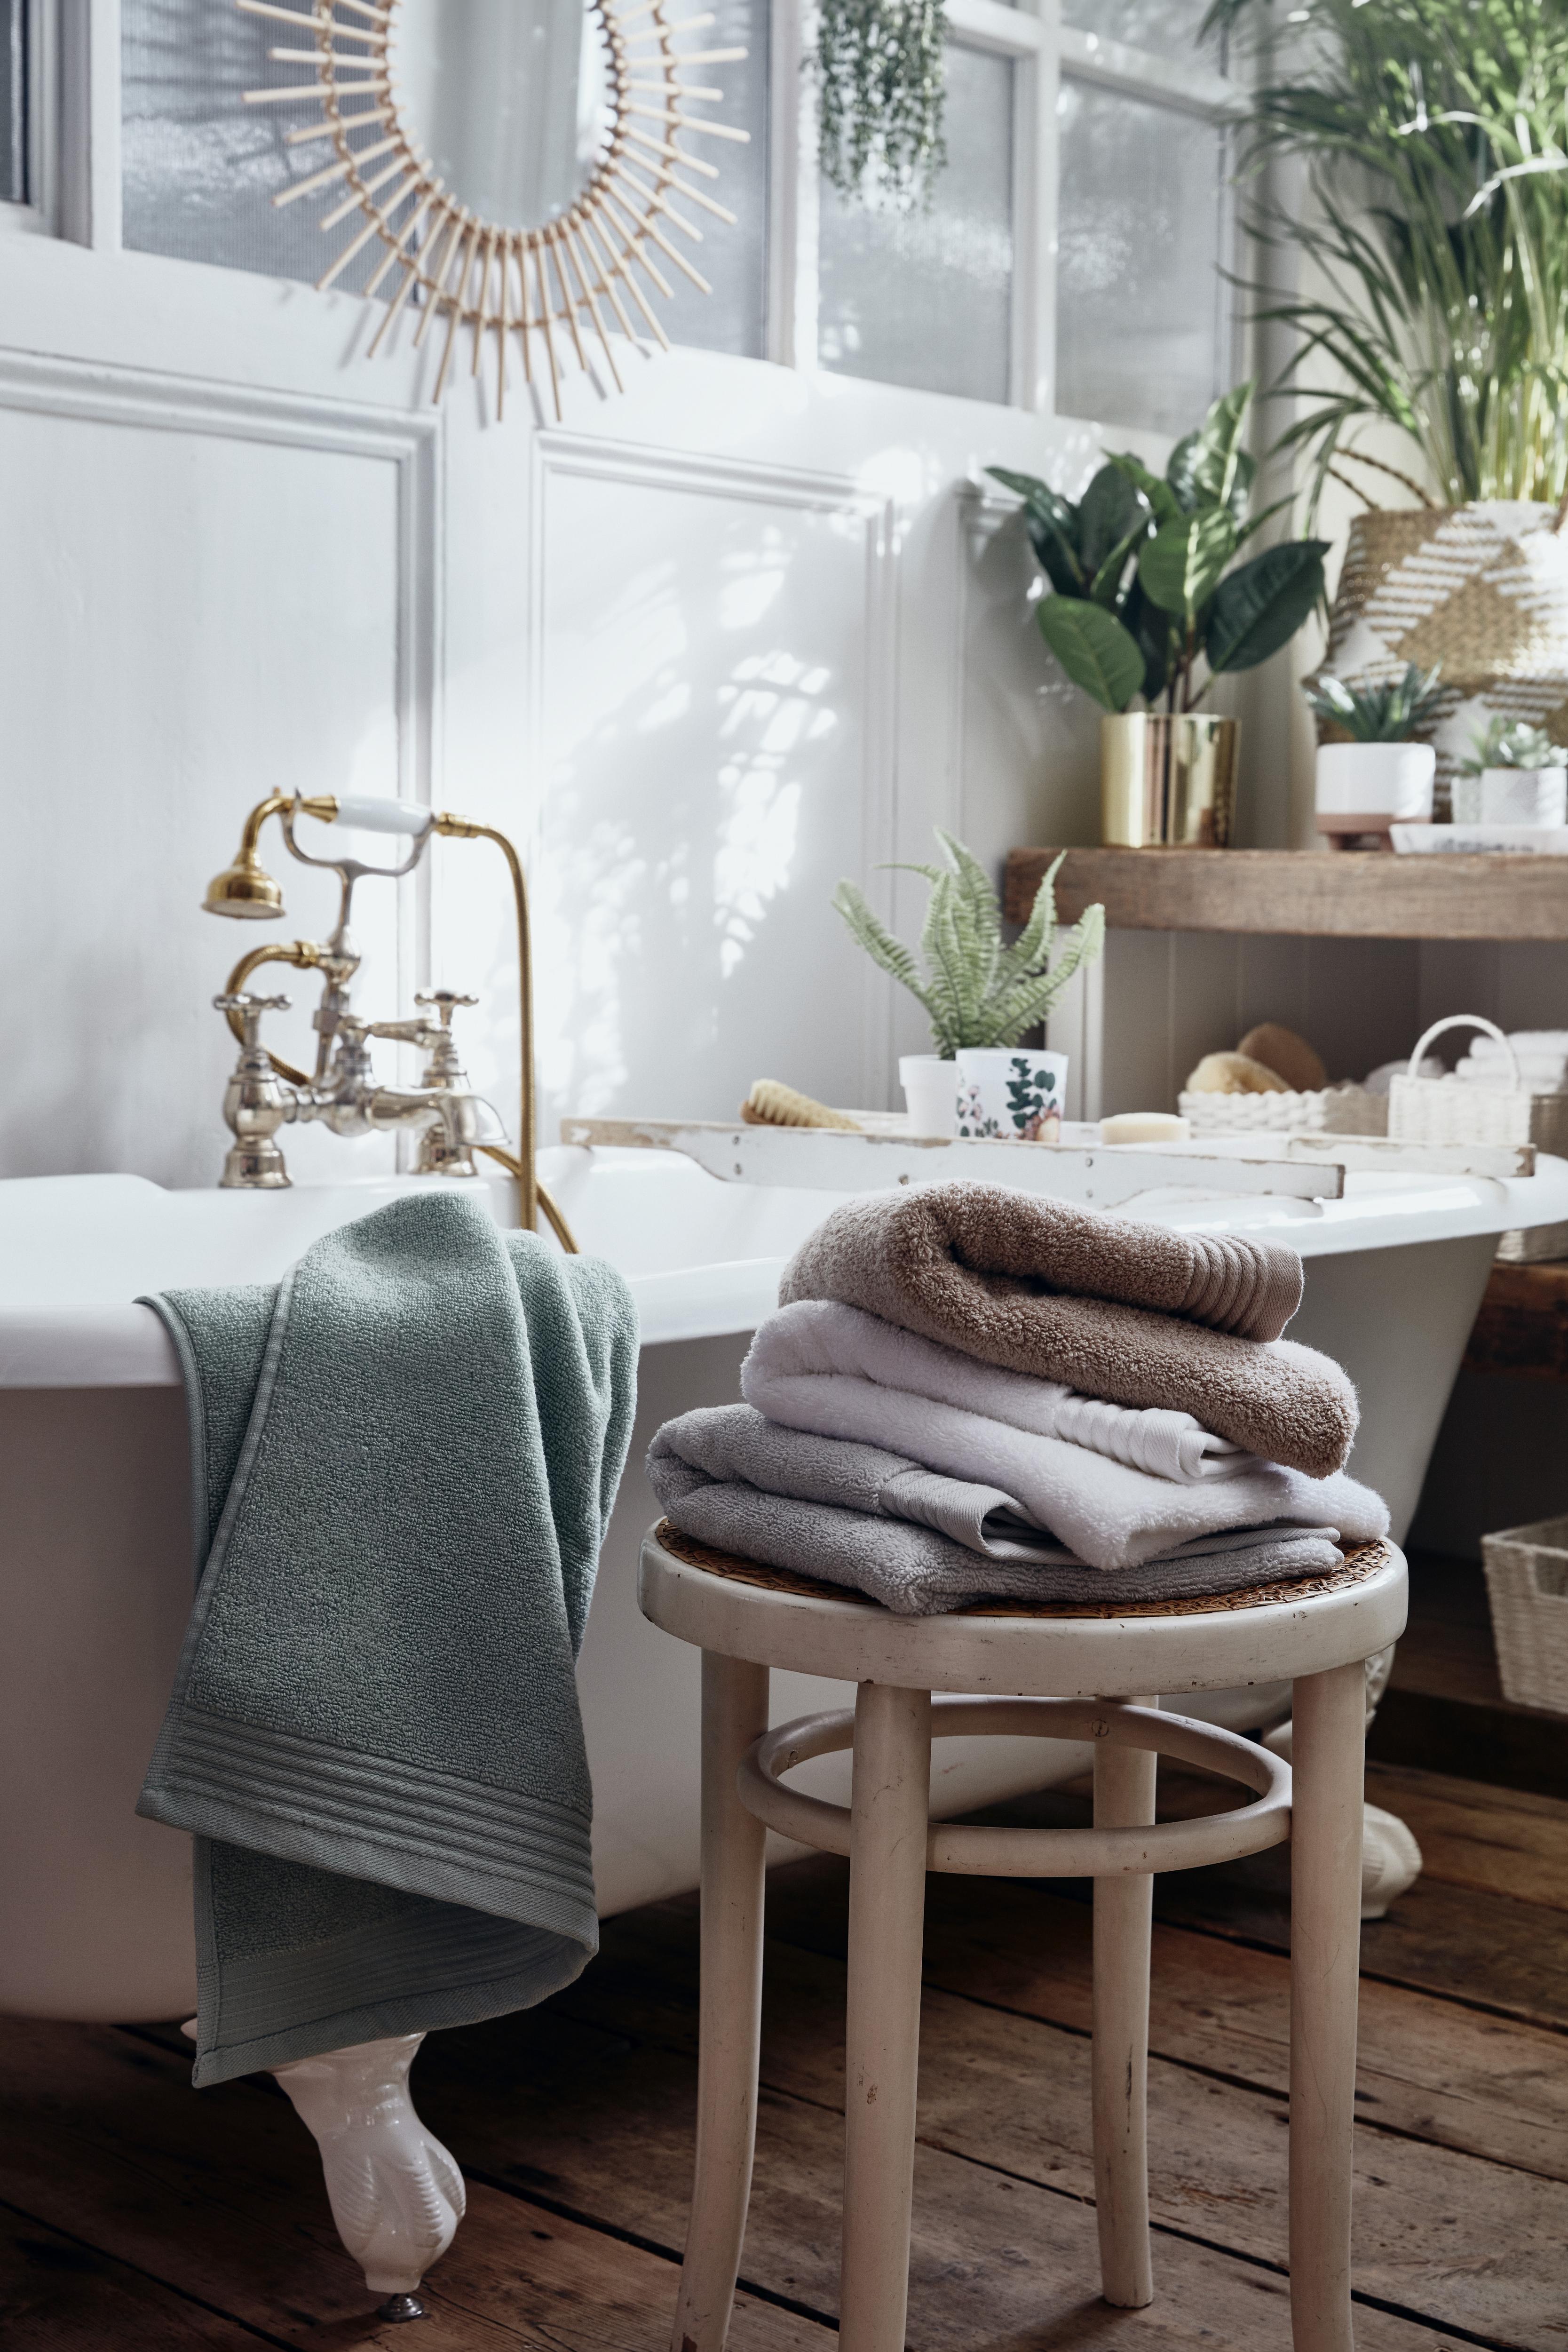 Primark Home has released a gorgeous new range – hello bathroom ...